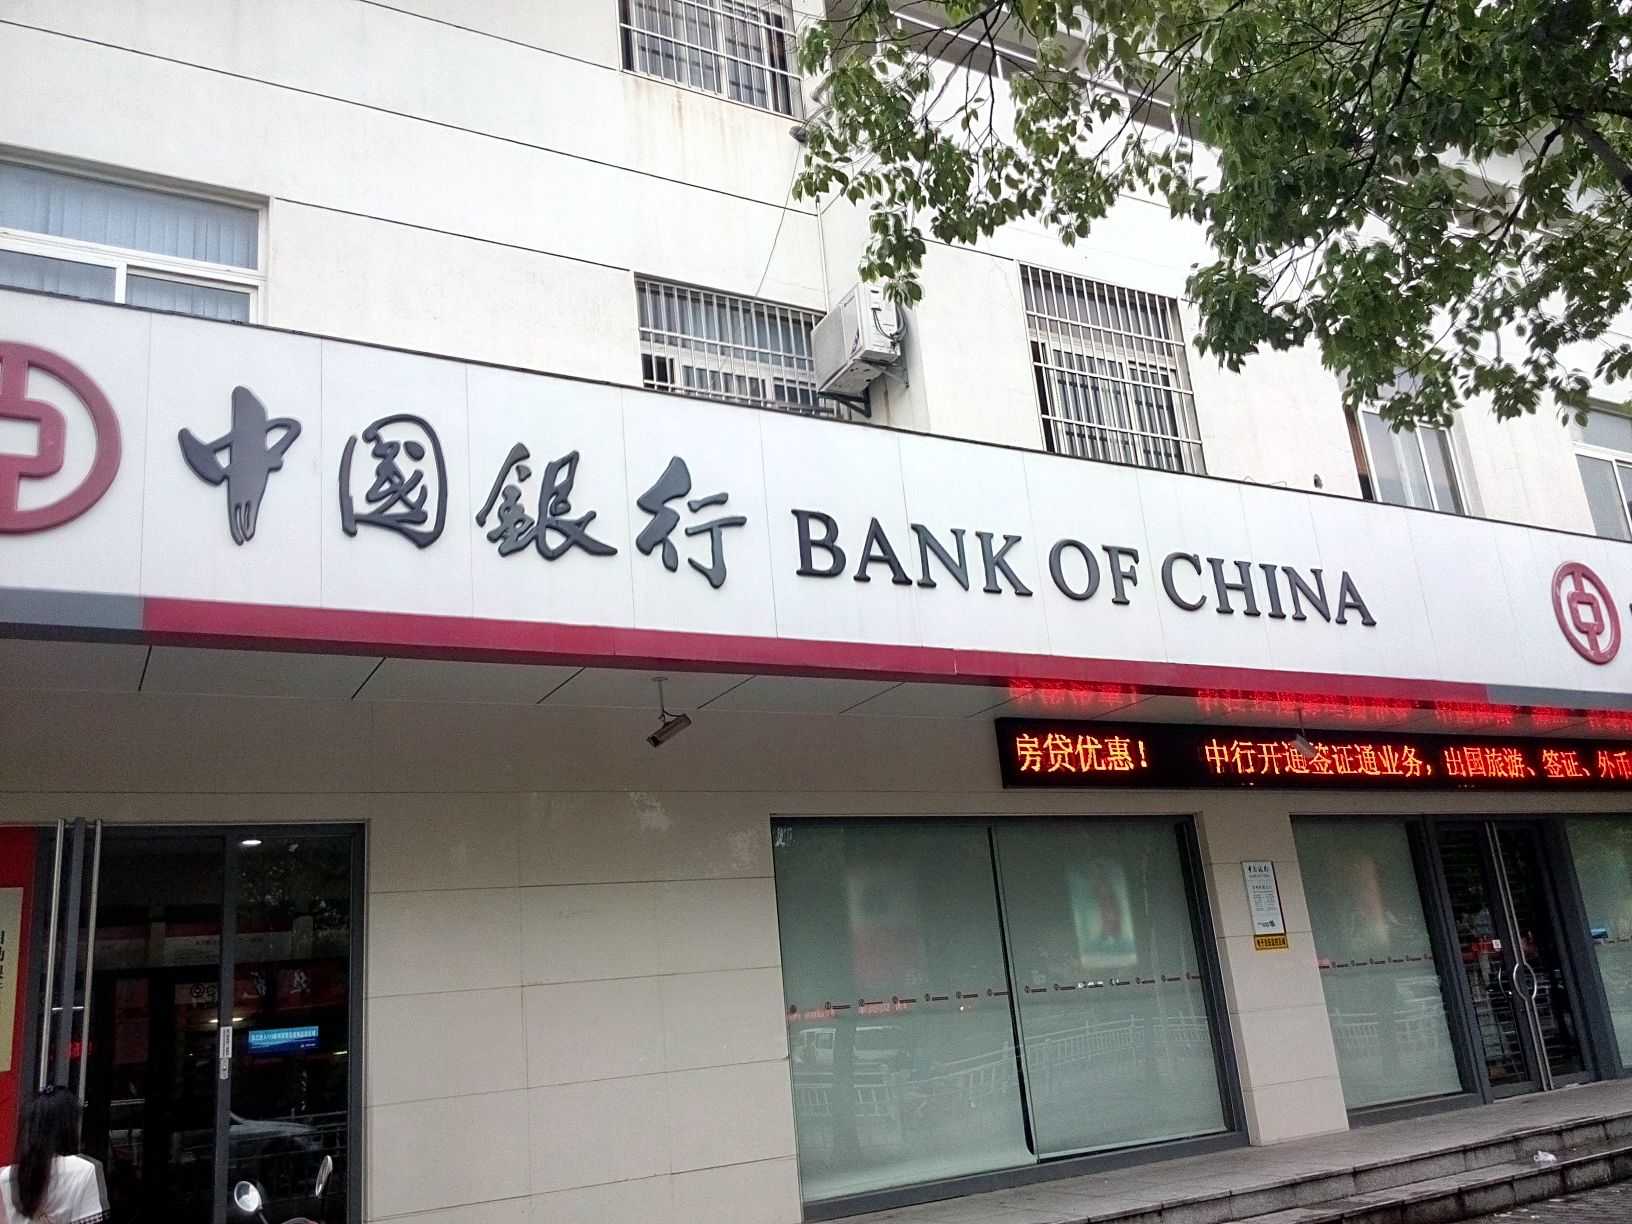 Bank of china китай. Банк Китая. Китайские банки. Банк оф чина. Китайские банки в России.